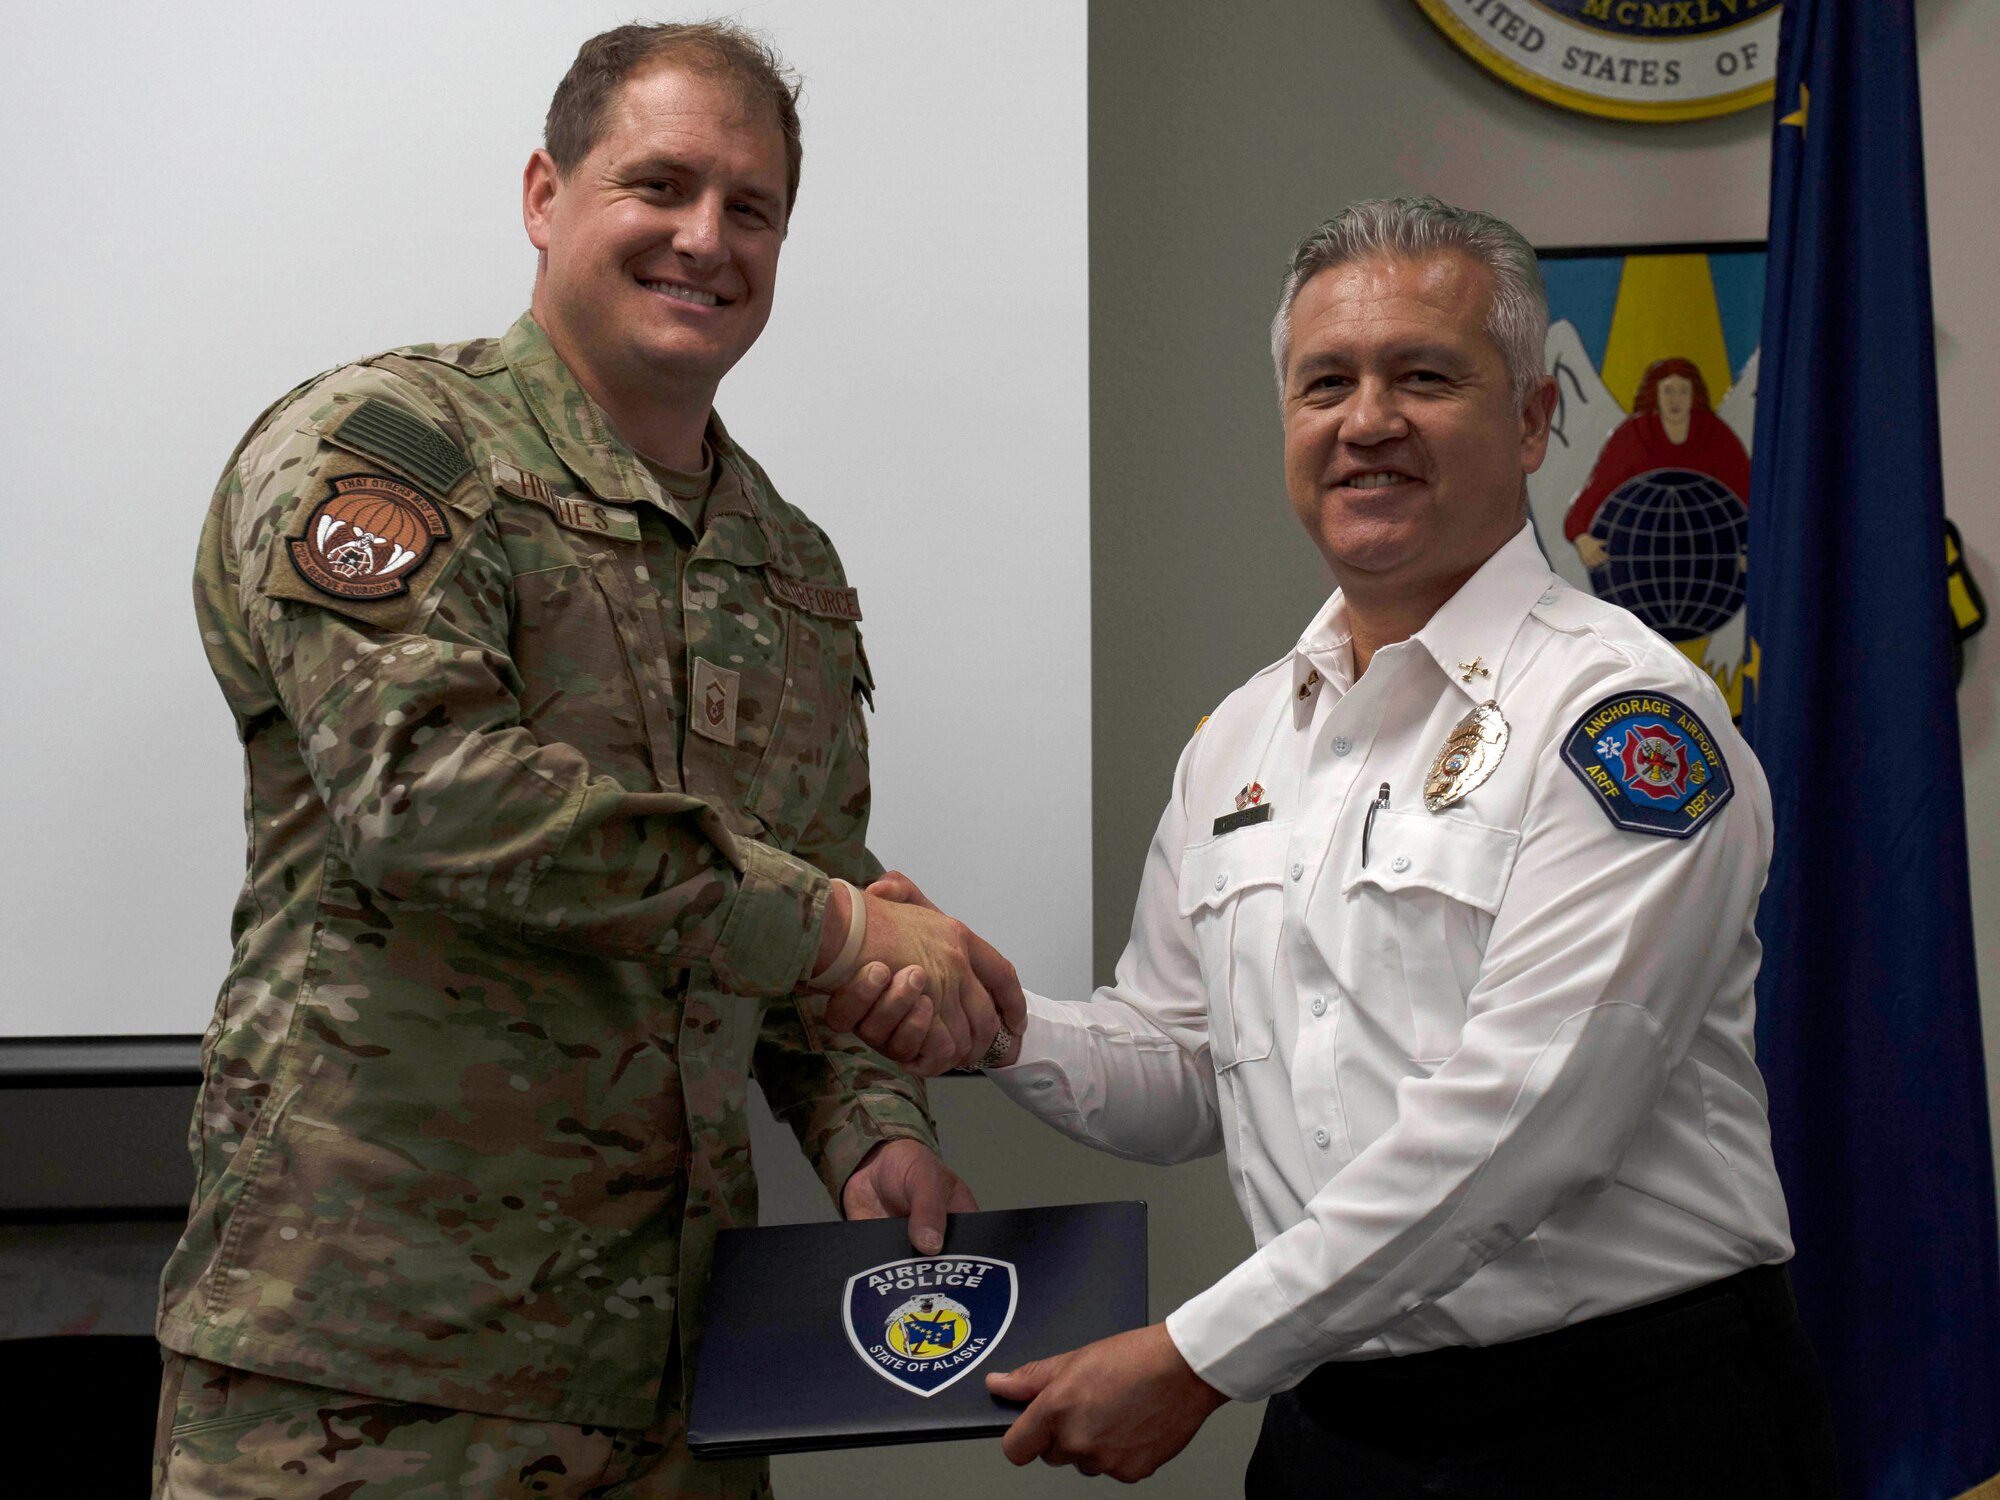 212th Rescue Squadron pararescueman earns Chief’s Commendation Award